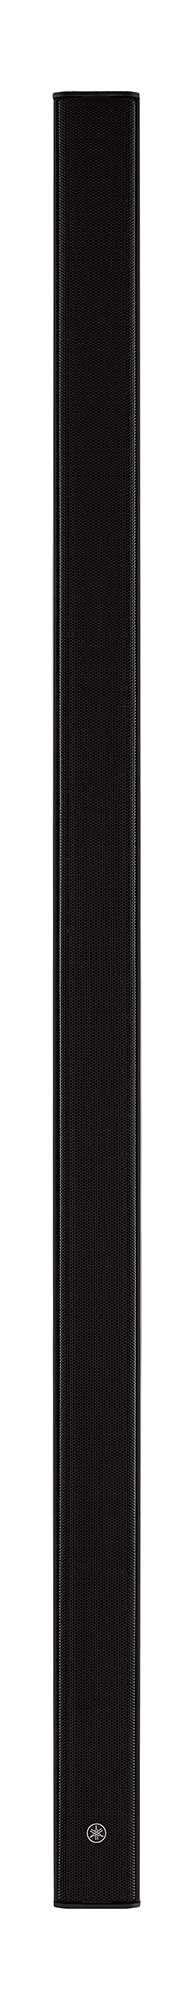 Yamaha VXL1B-24 Slim Line Array Speaker